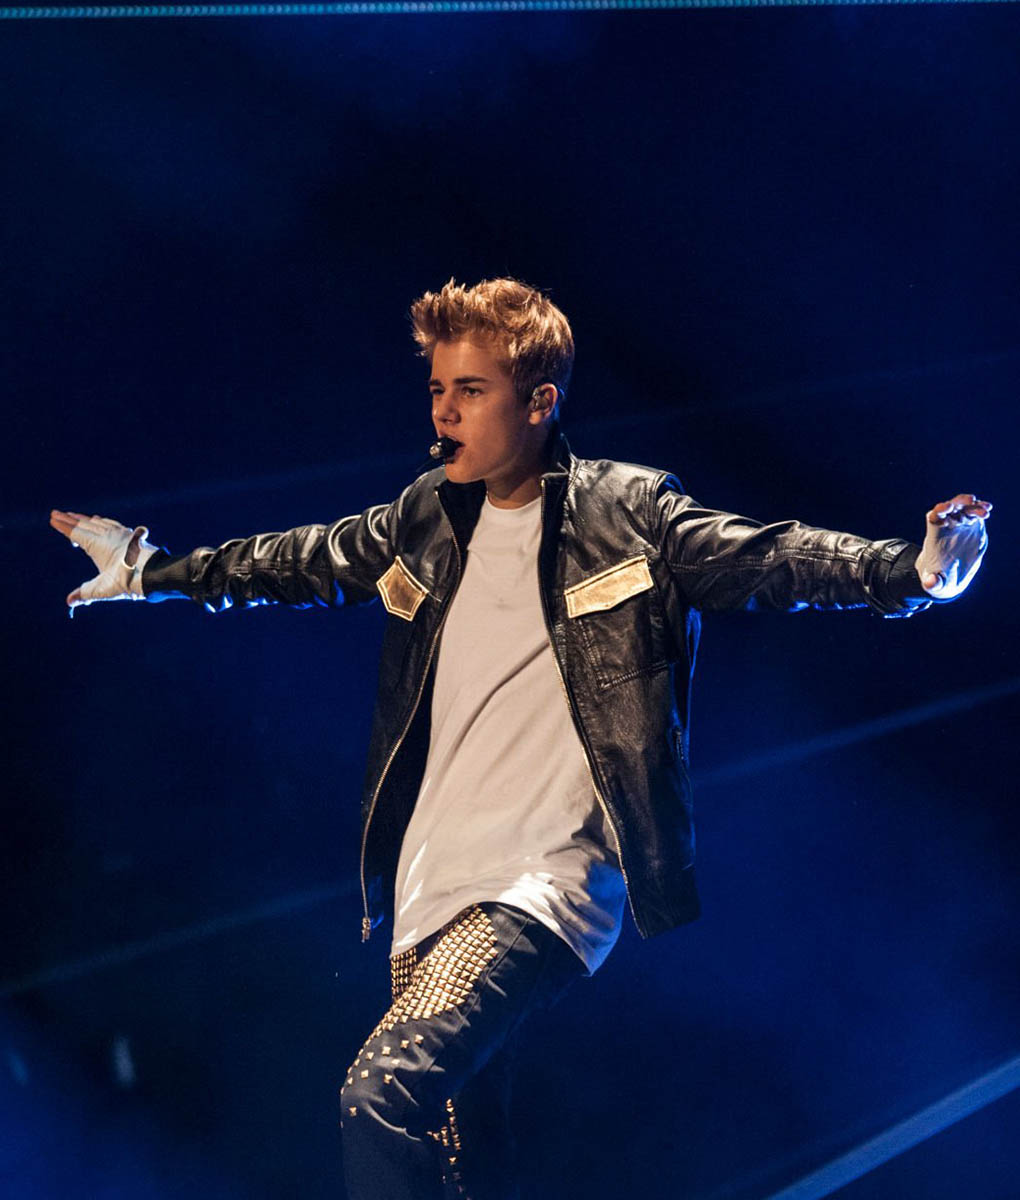 Germanys-Next-Topmodel-Justin-Bieber-Jacket-4